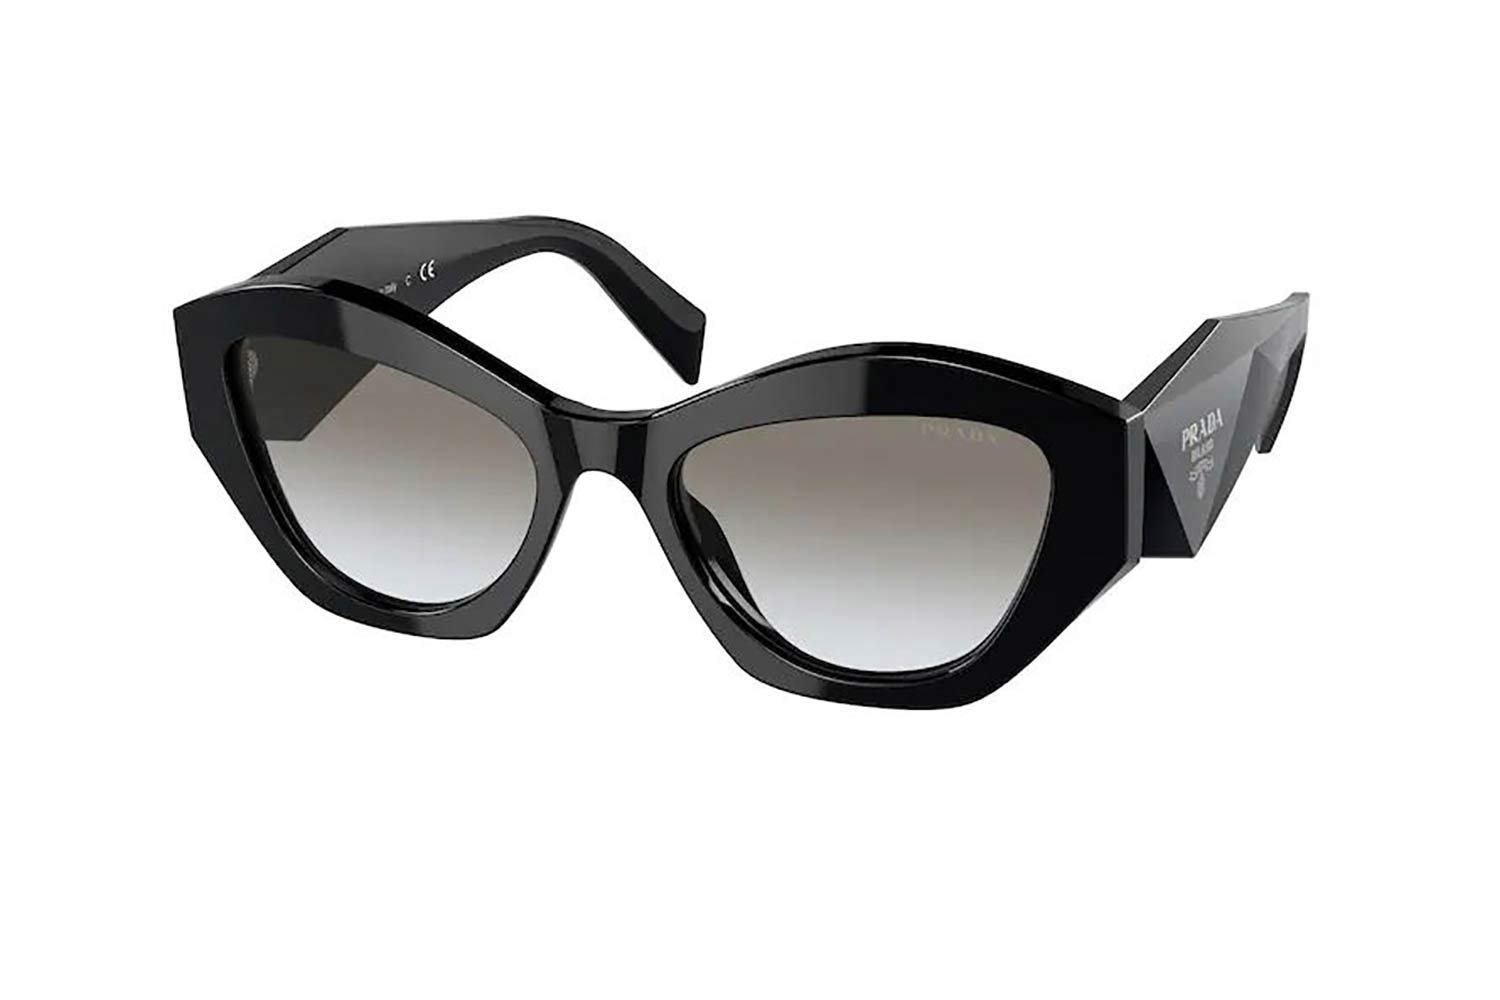 Prada Gray & Blue Floral-Lens Teddy Pilot Sunglasses | Best Price and  Reviews | Zulily